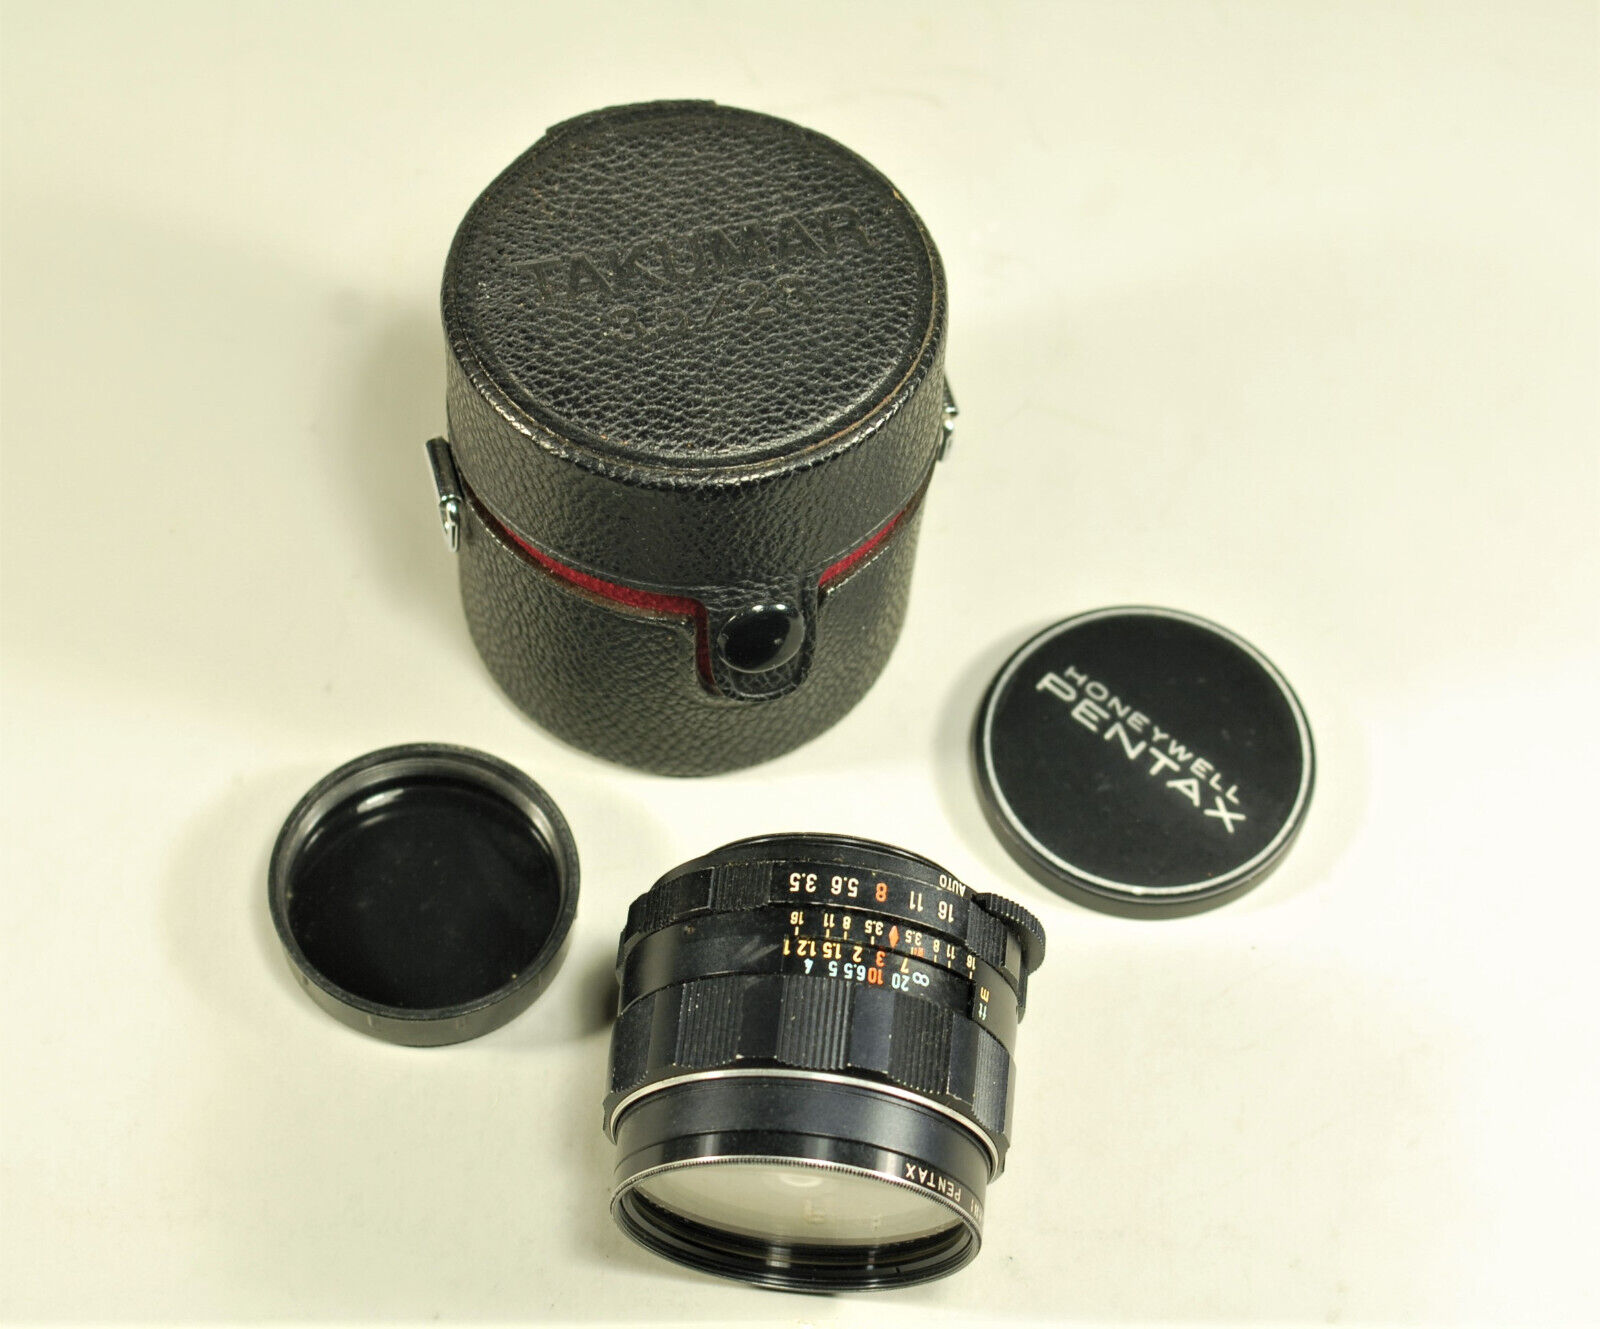 Super Takumar 28mm f3.5 lens for pentax